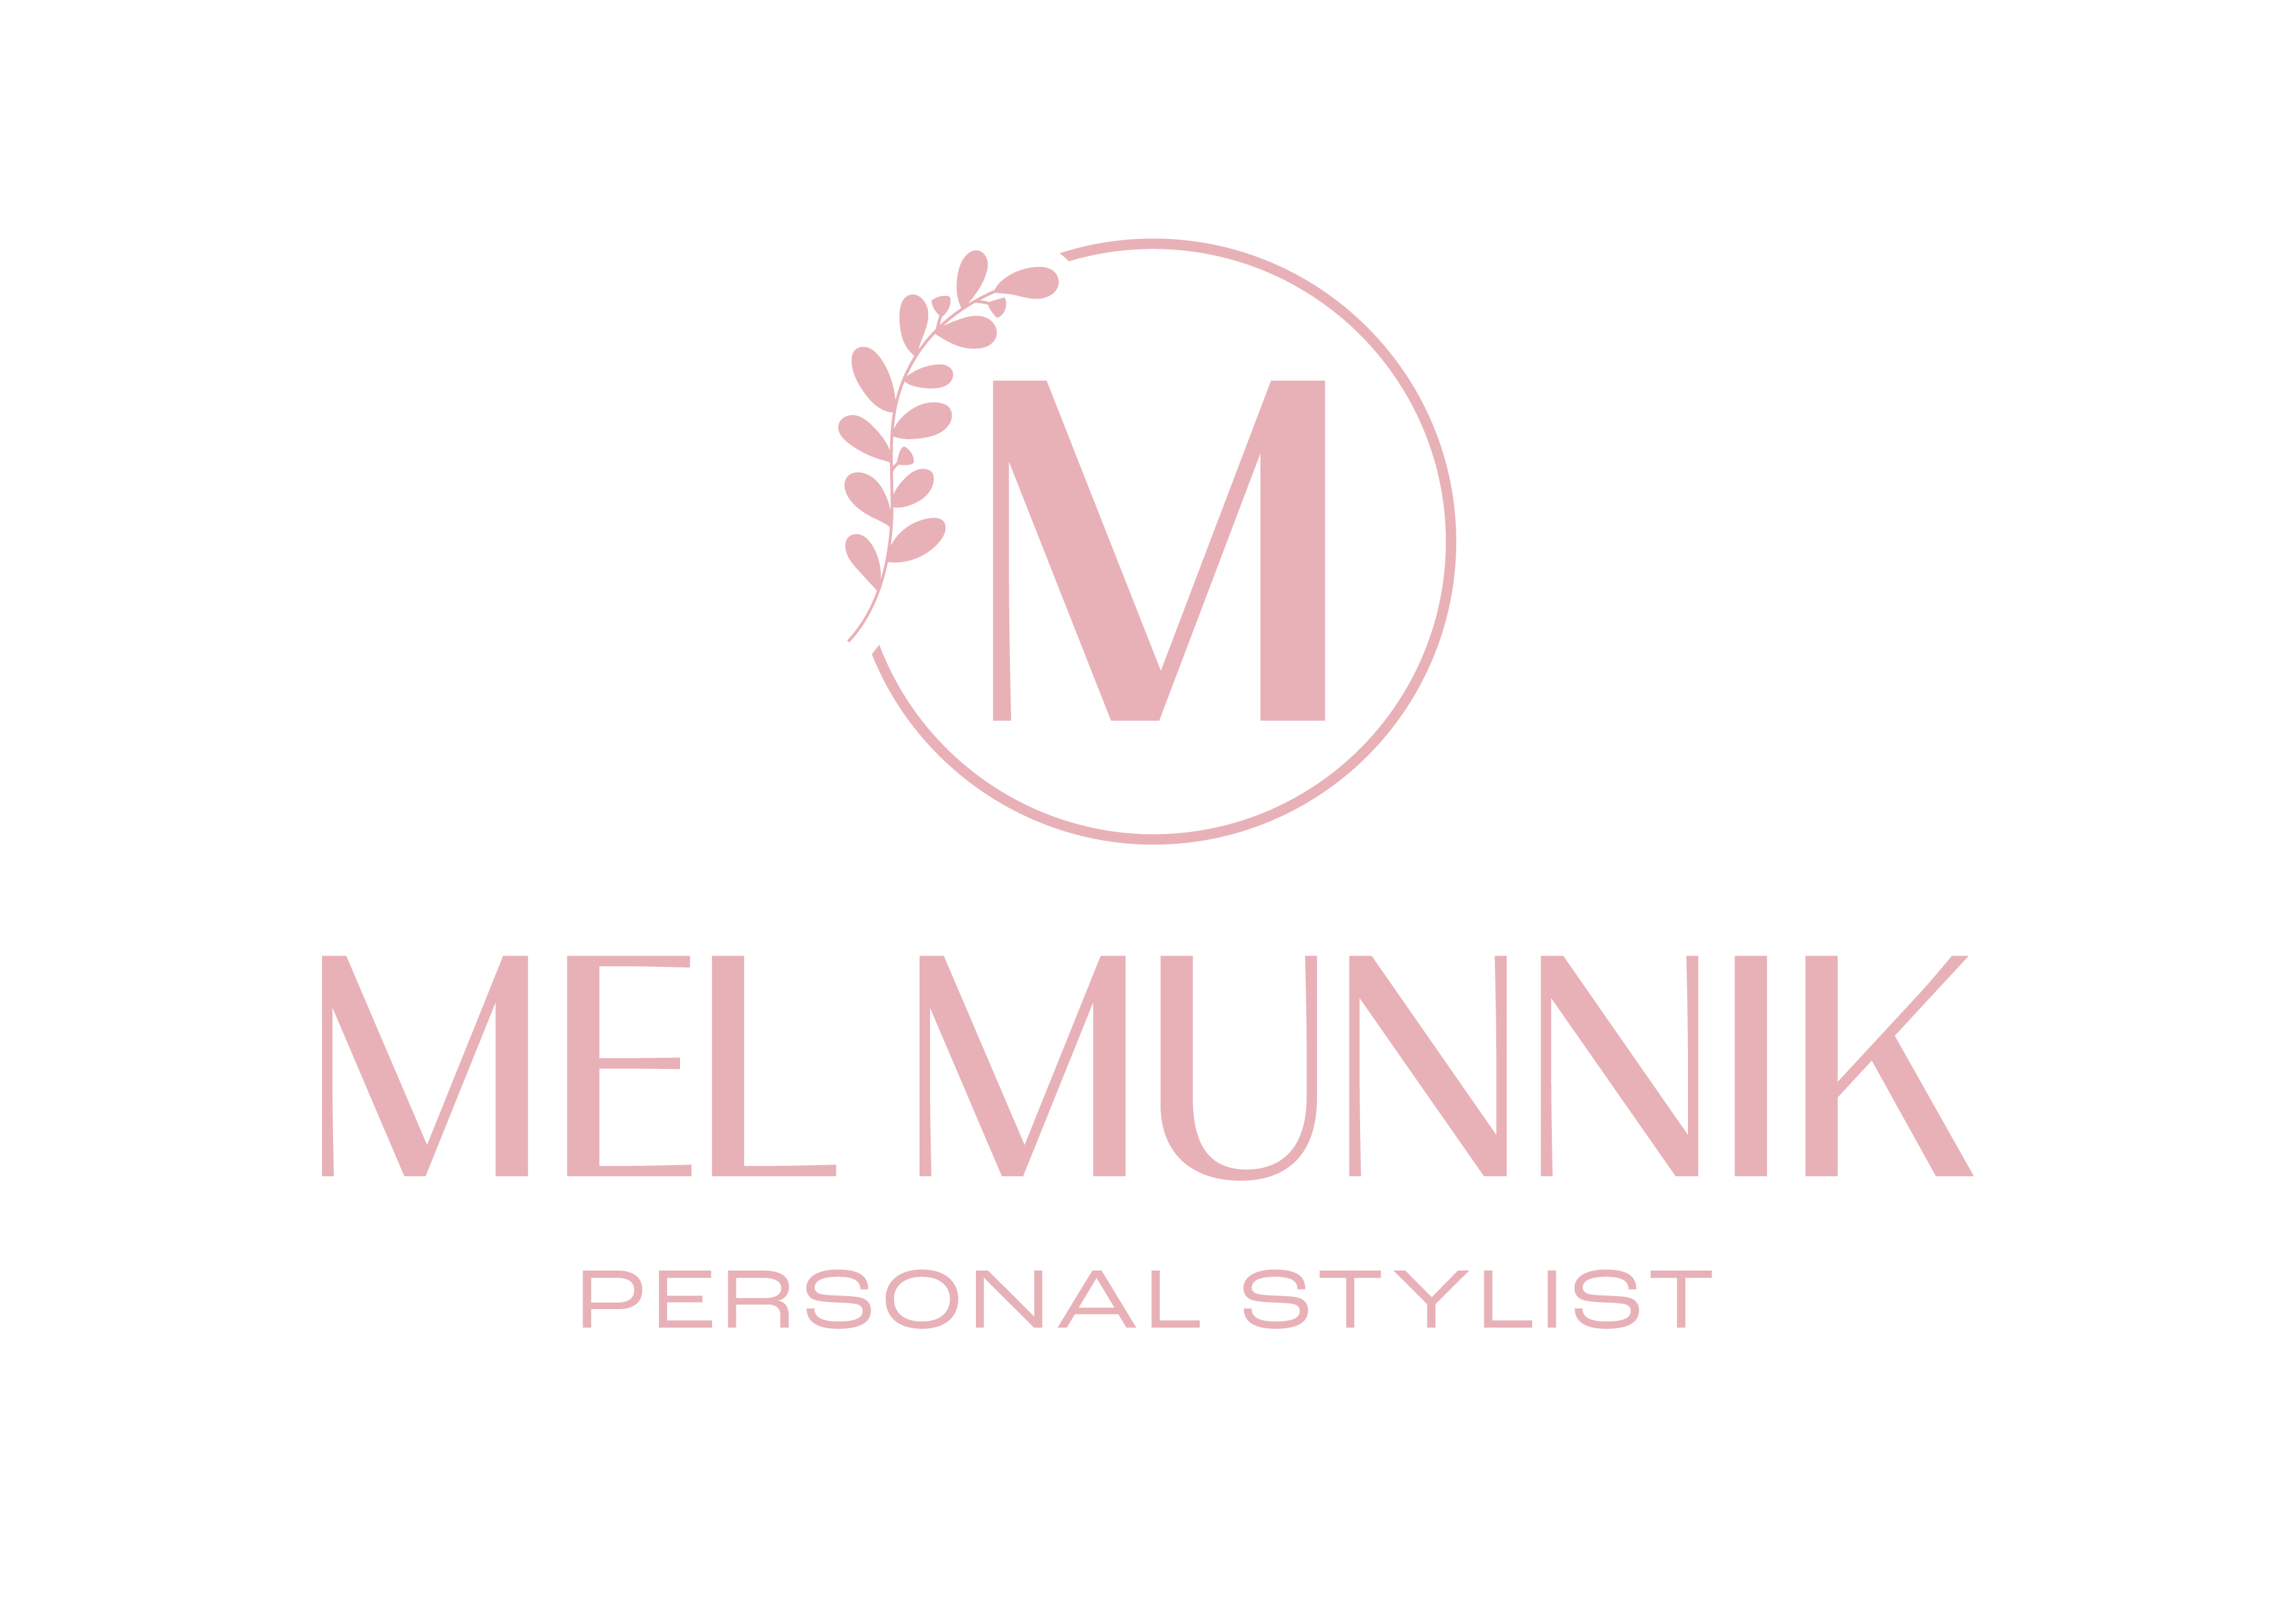 Mel Munnik Personal Stylist Logo